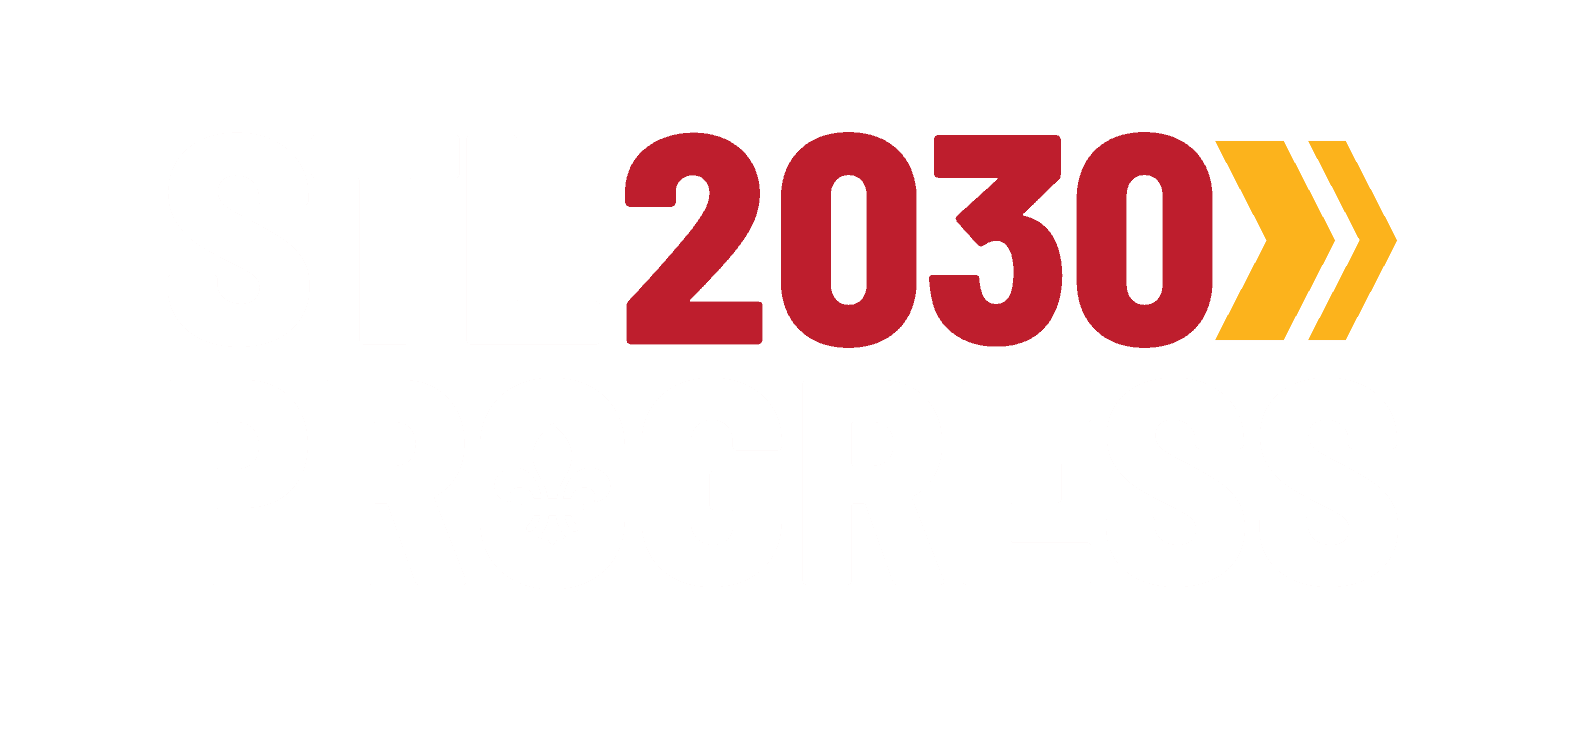 StL 2030 Progress Logo